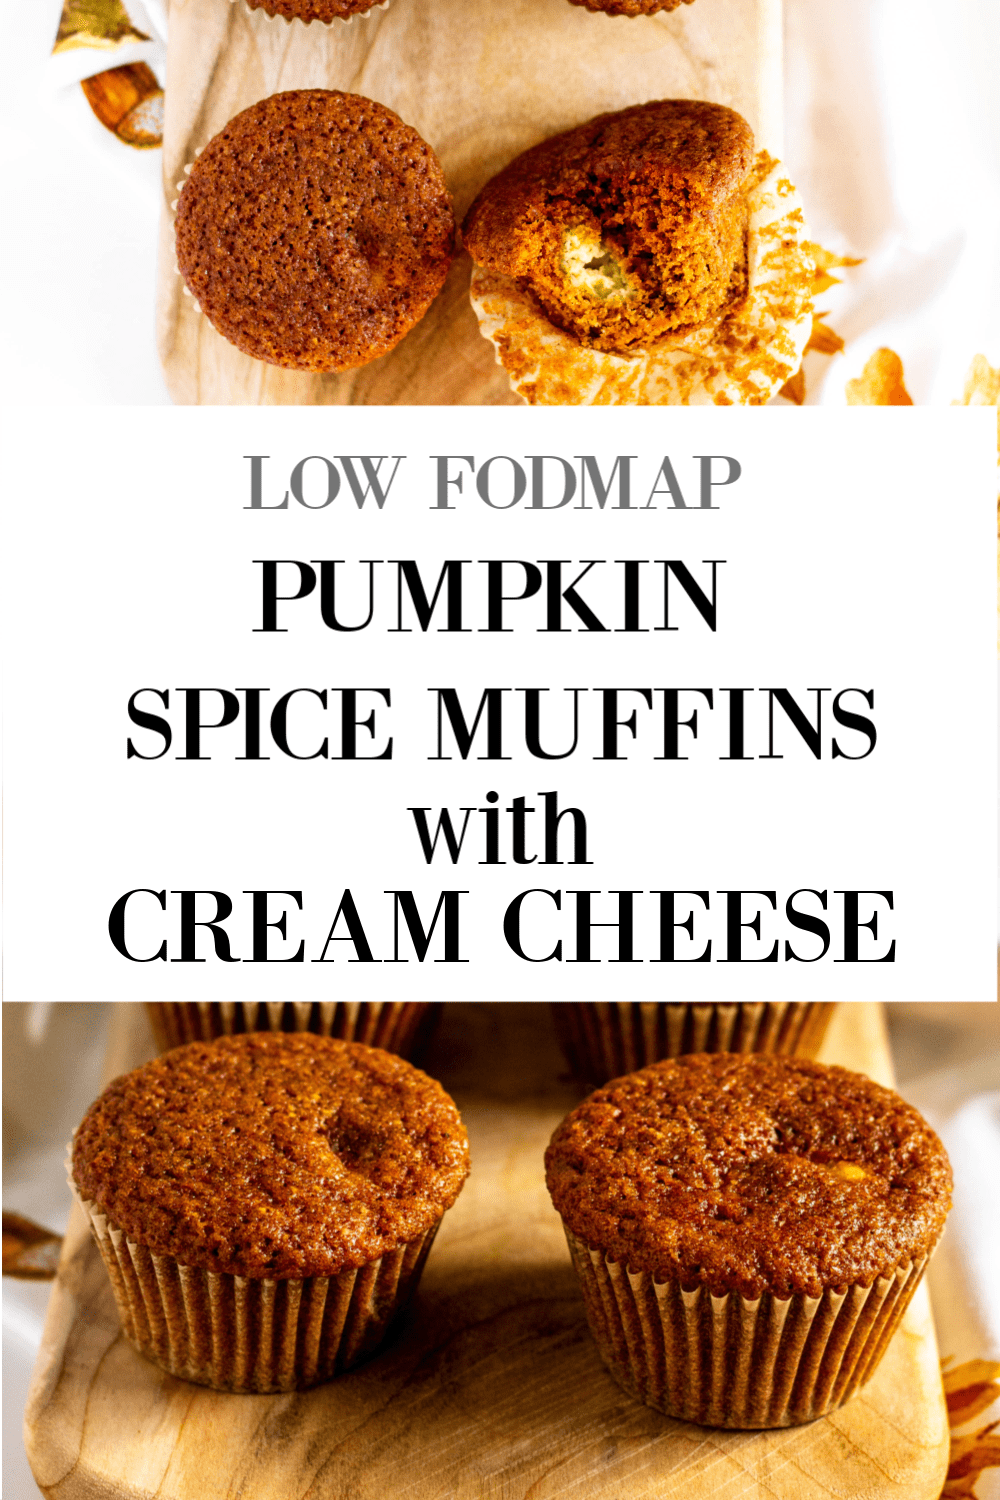 Pumpkin Spice Muffins with Cream Cheese #lowfodmaprecipes #glutenfreerecipes #lactosefree